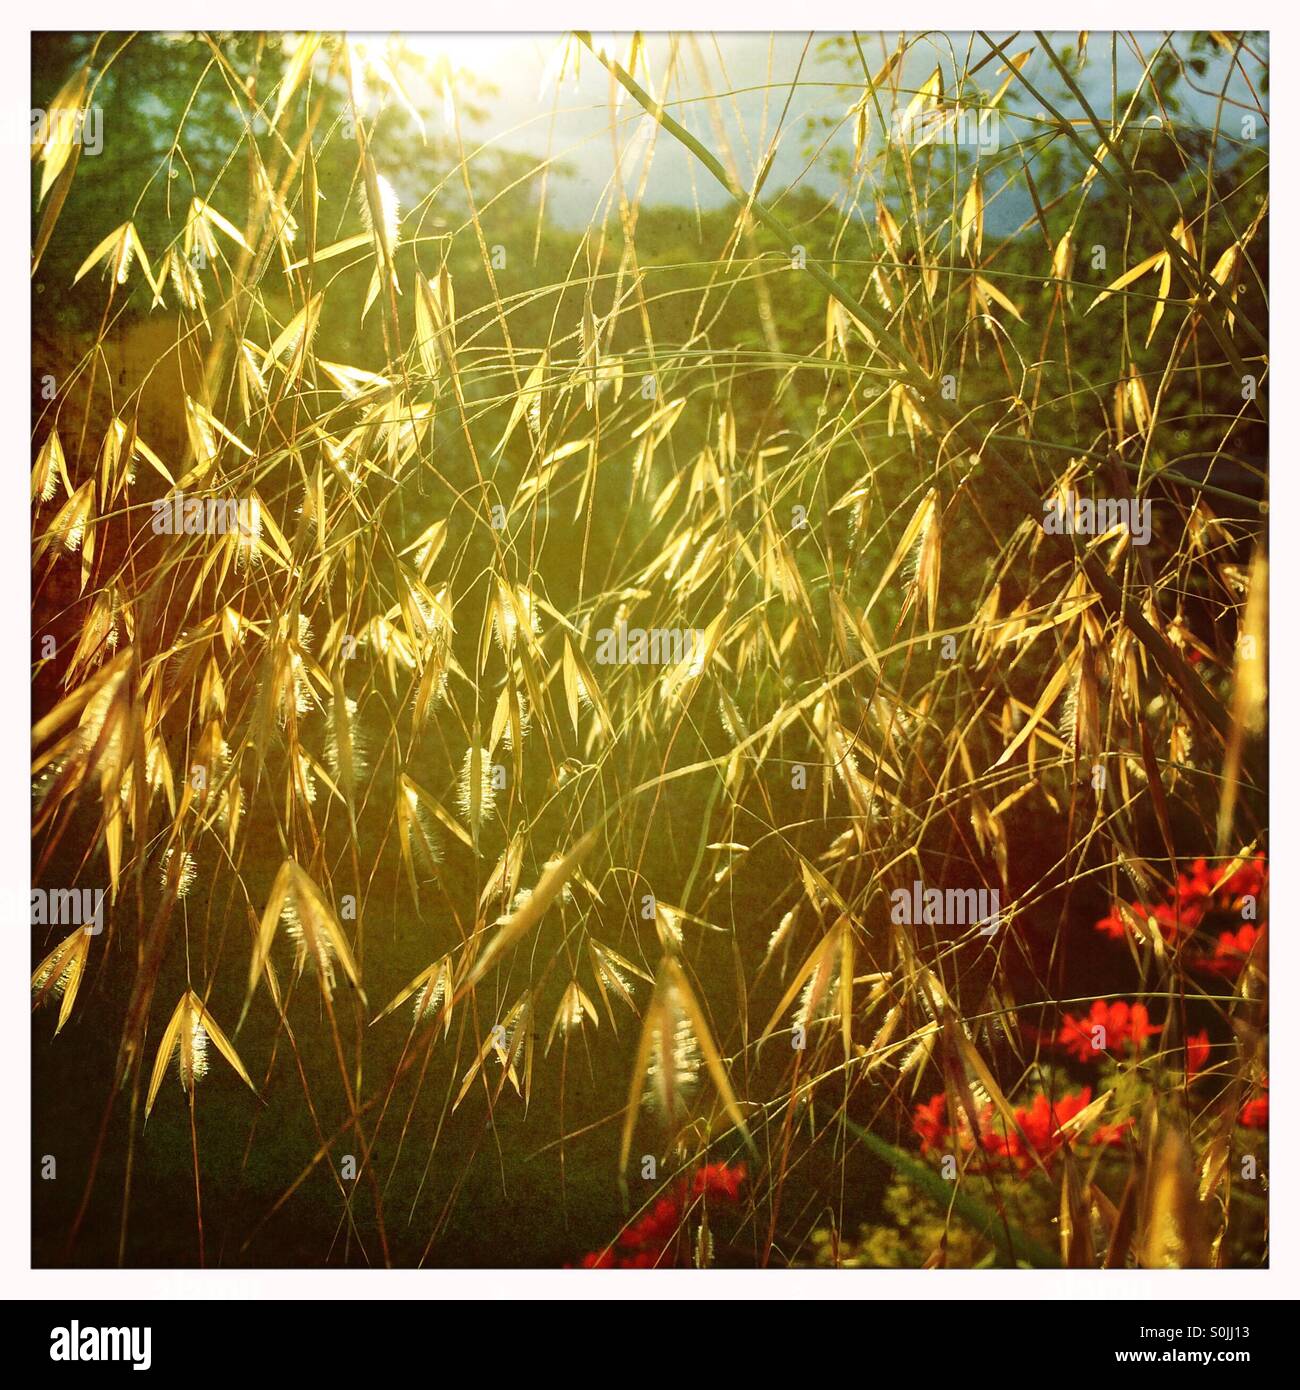 Evening sun shining through golden oats grass - Stipa gigantea Stock Photo